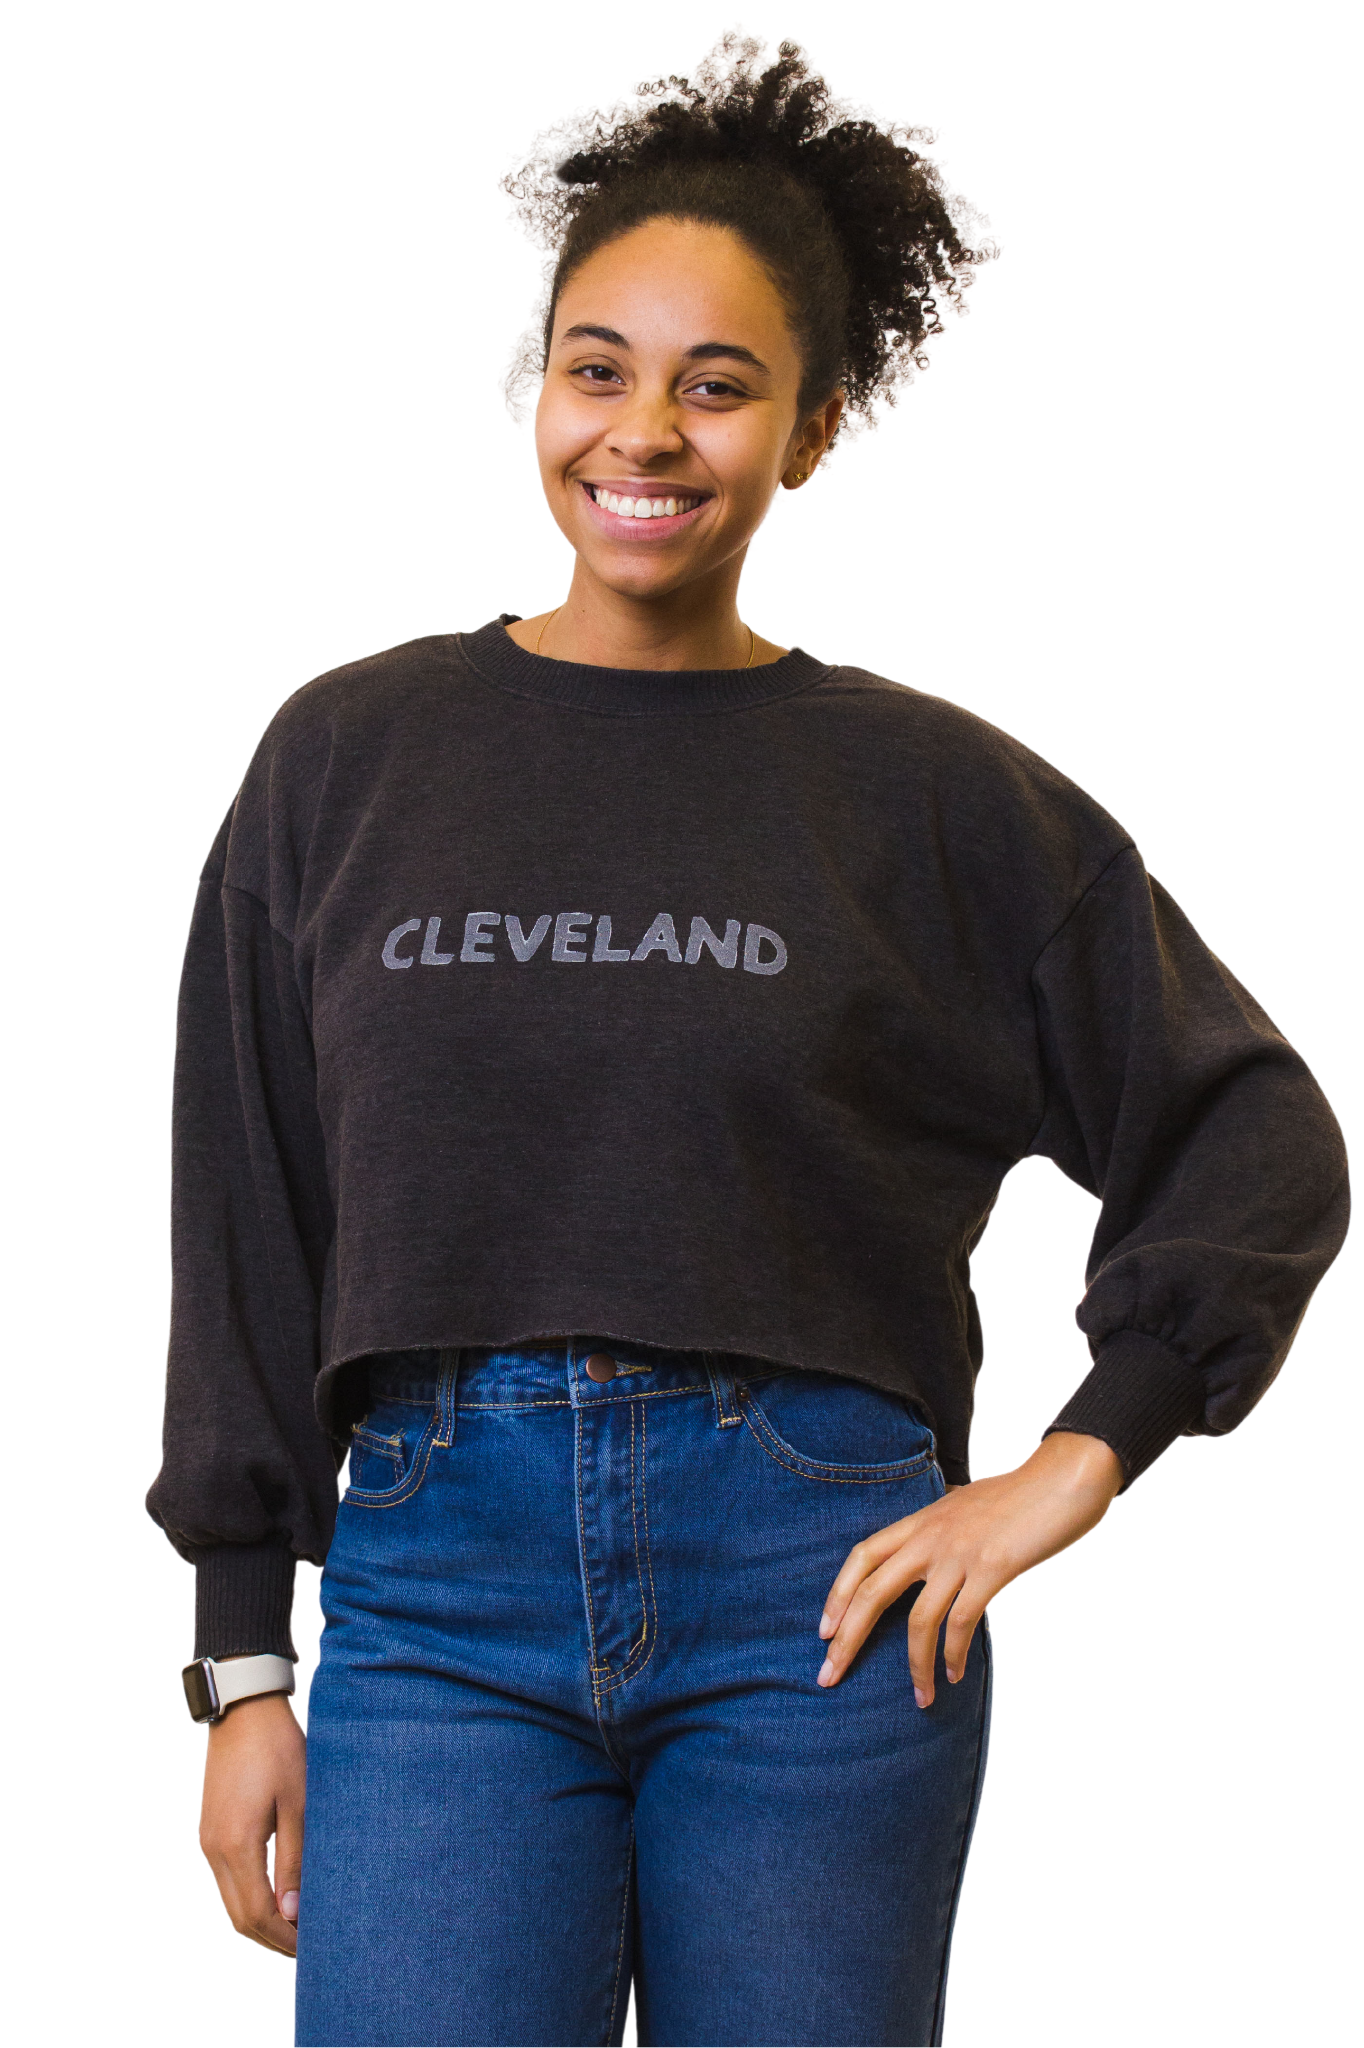 Cleveland Hand Stamped Super Soft Pullover